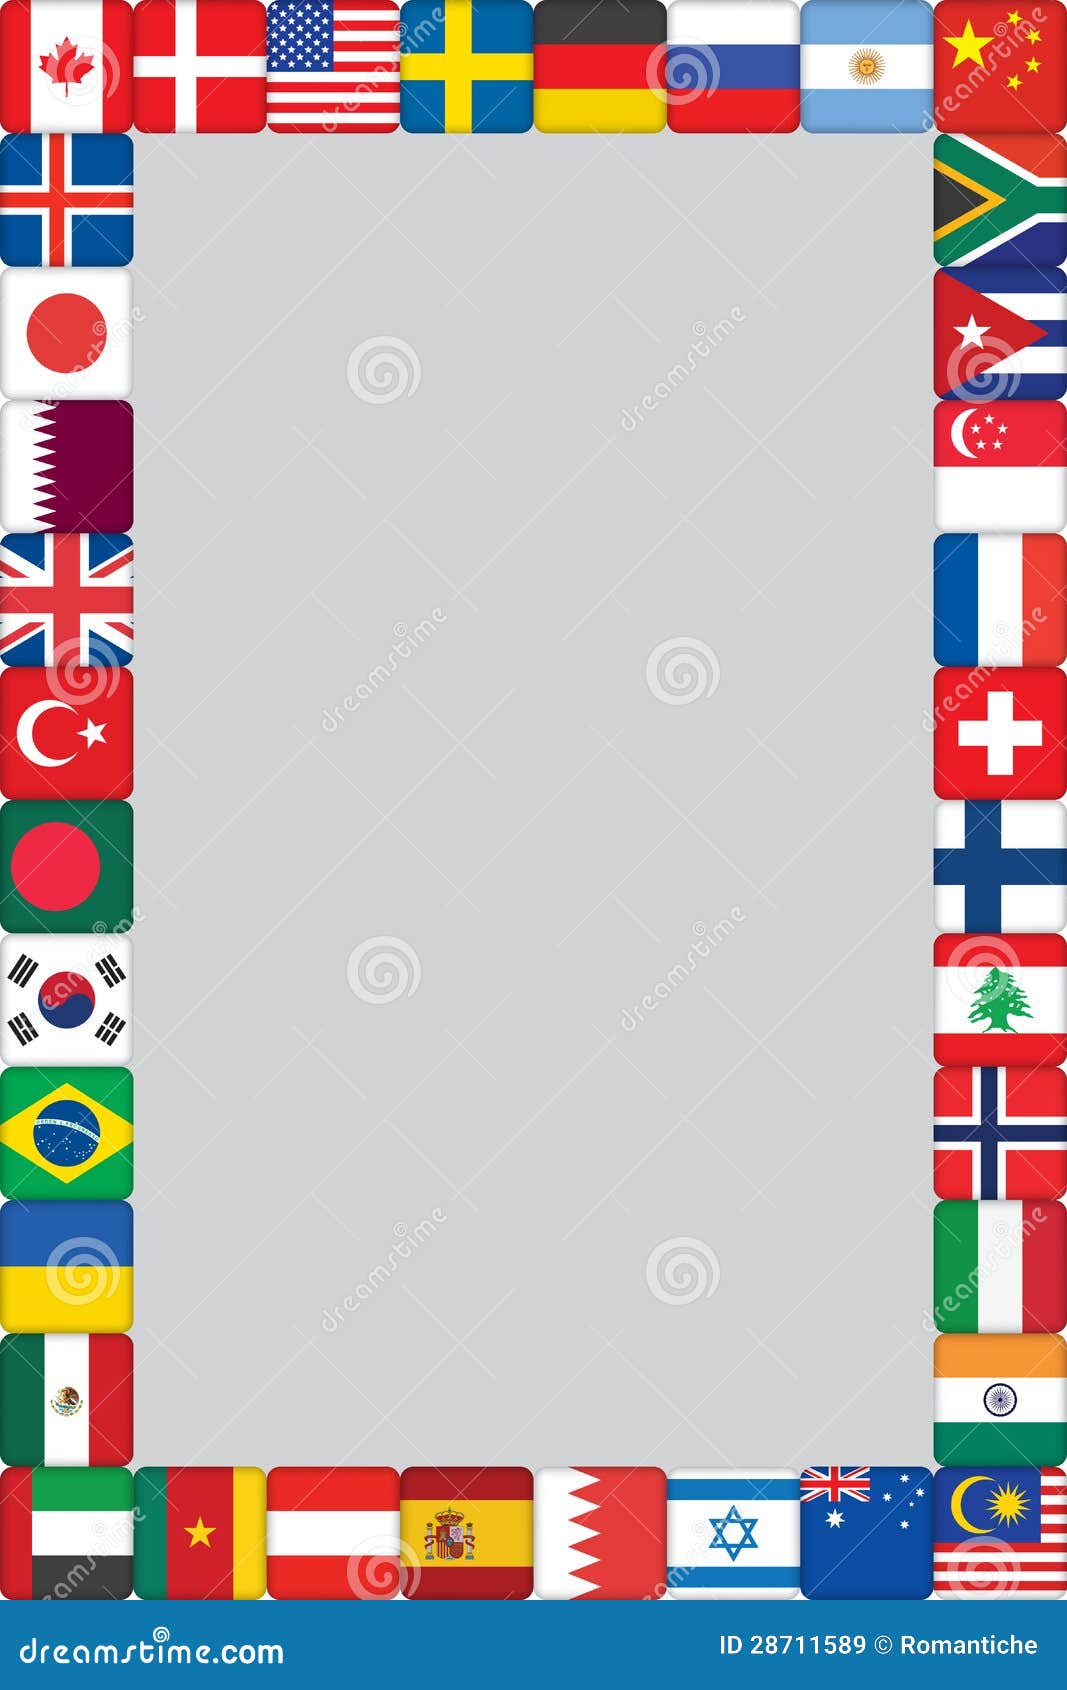 clip art flags international - photo #40